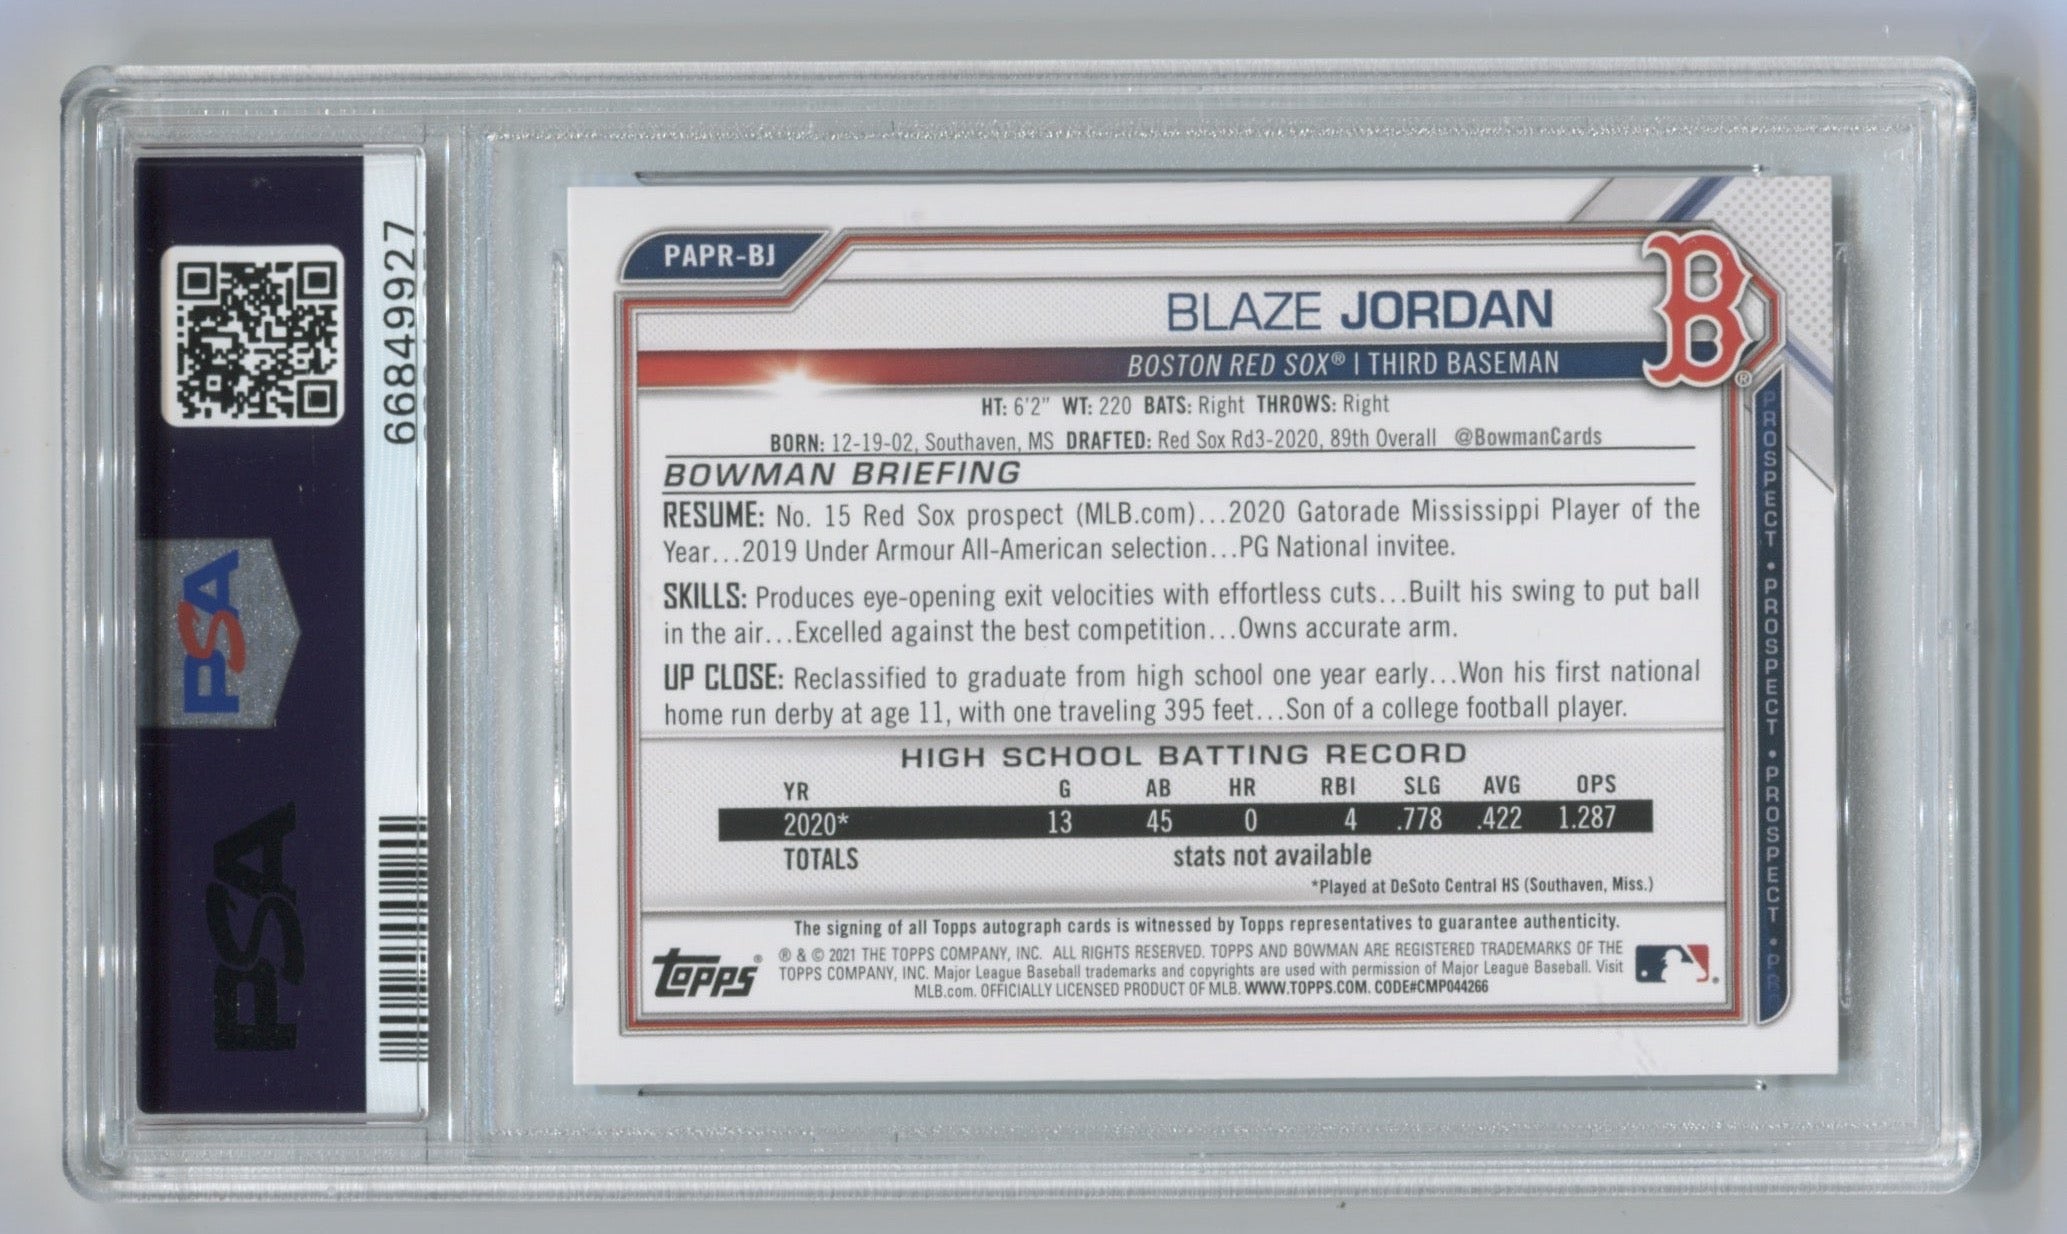 2021 Bowman Prospect Autographs #PAPRBJ Blaze Jordan PSA 10 | Eastridge Sports Cards